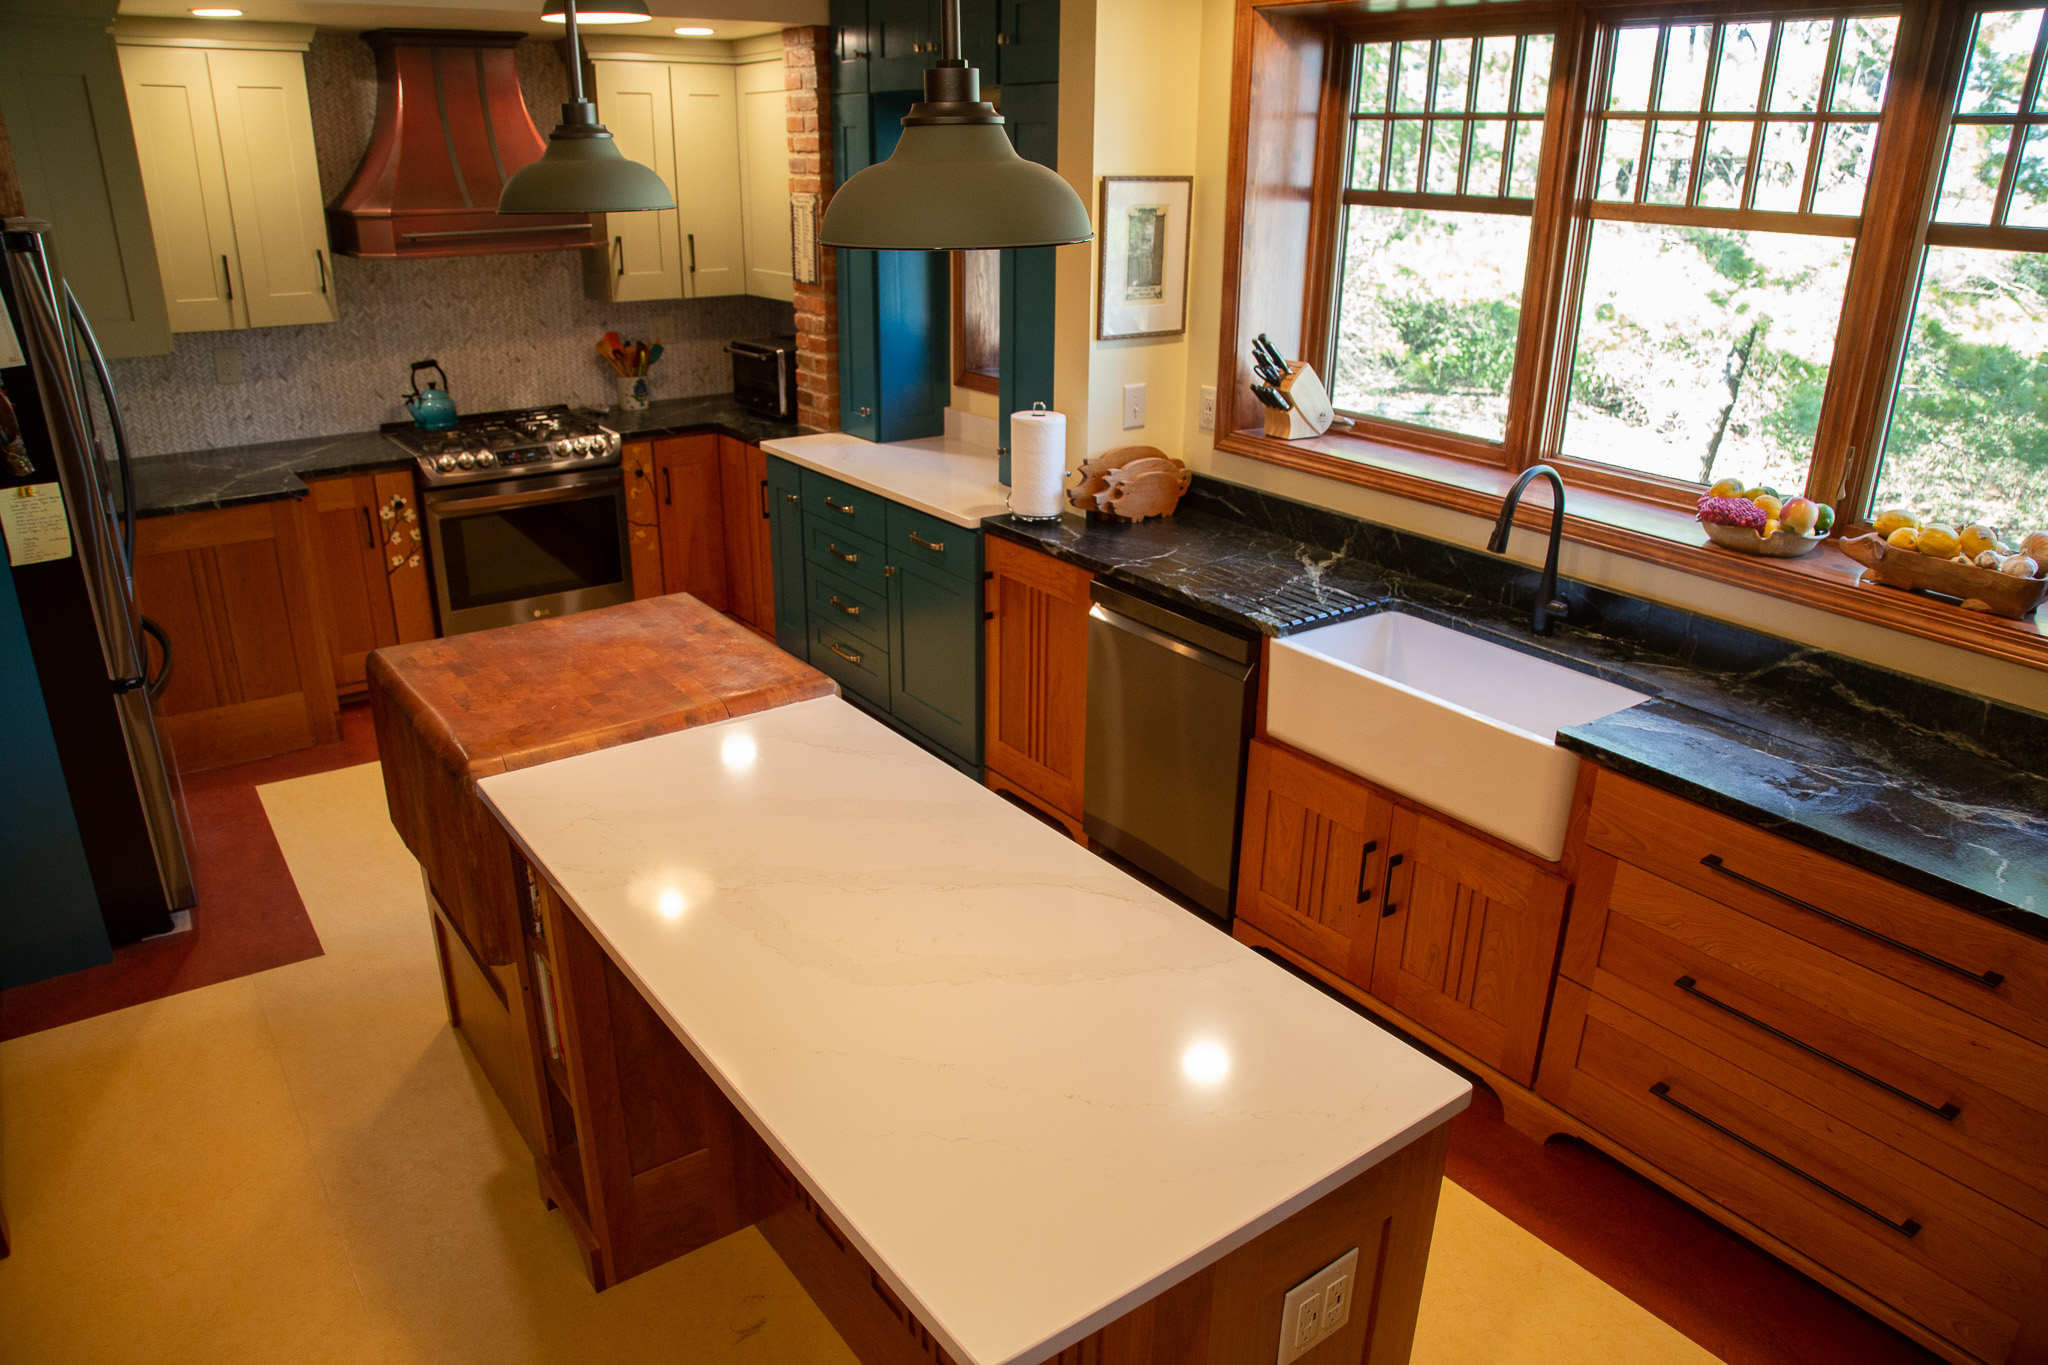 Copper range hood to complement rustic-inspired kitchen design, wood kitchen cabinets, elegant white kitchen countertops, timeless white tile backsplash